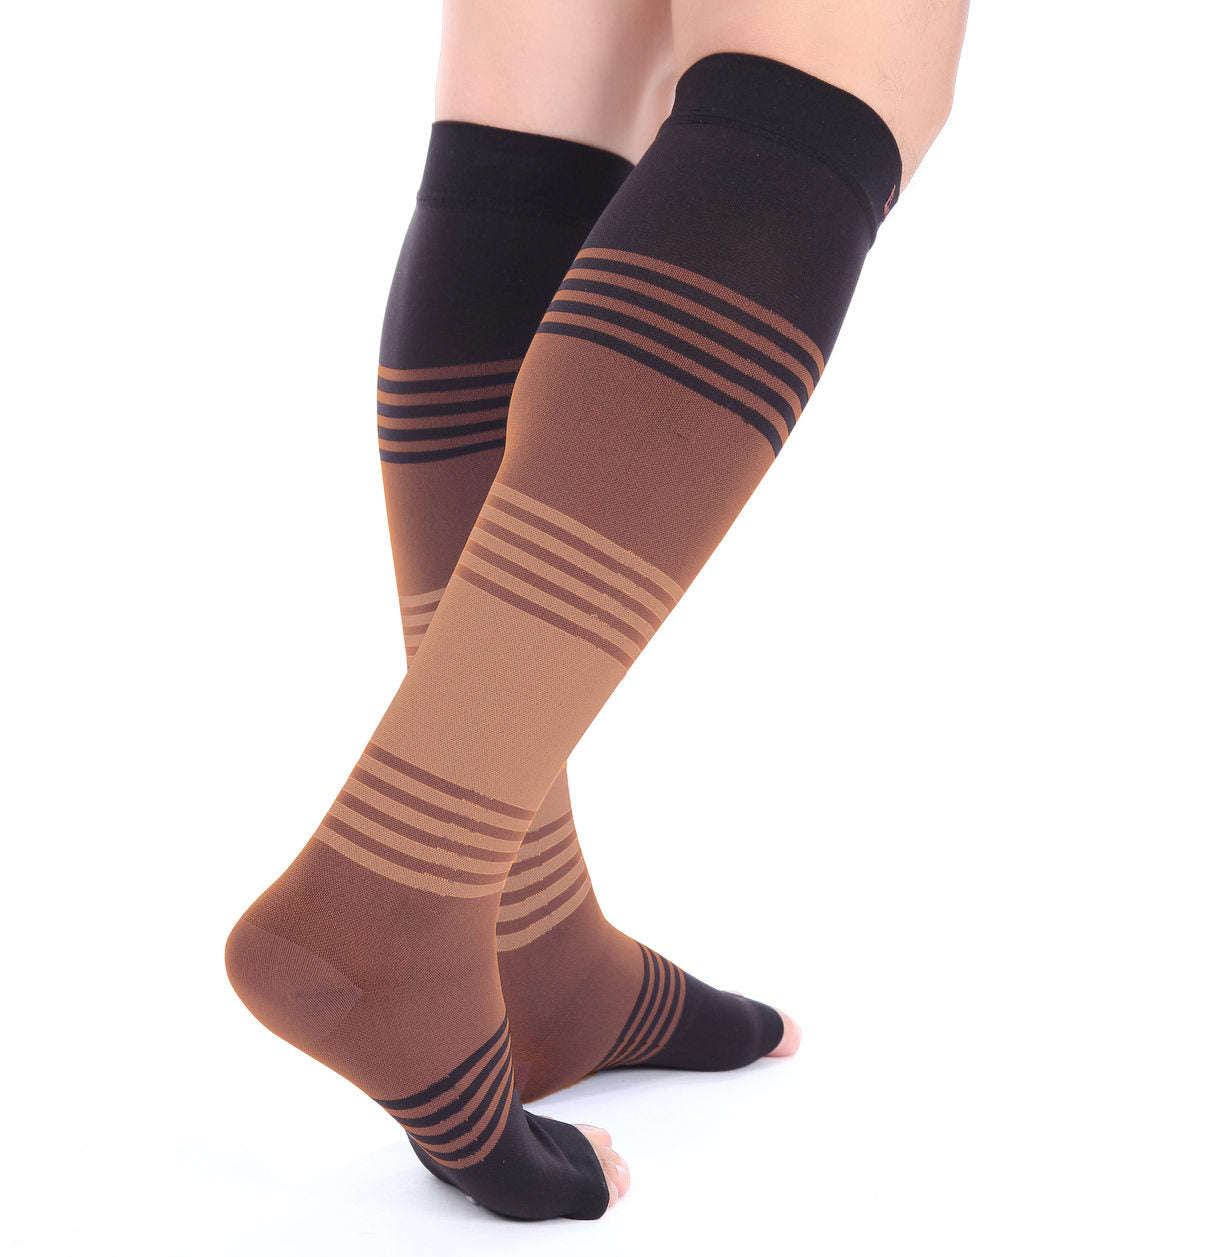 Open Toe Compression Socks 20-30 mmHg BLACK/BROWN/TAN by Doc Miller